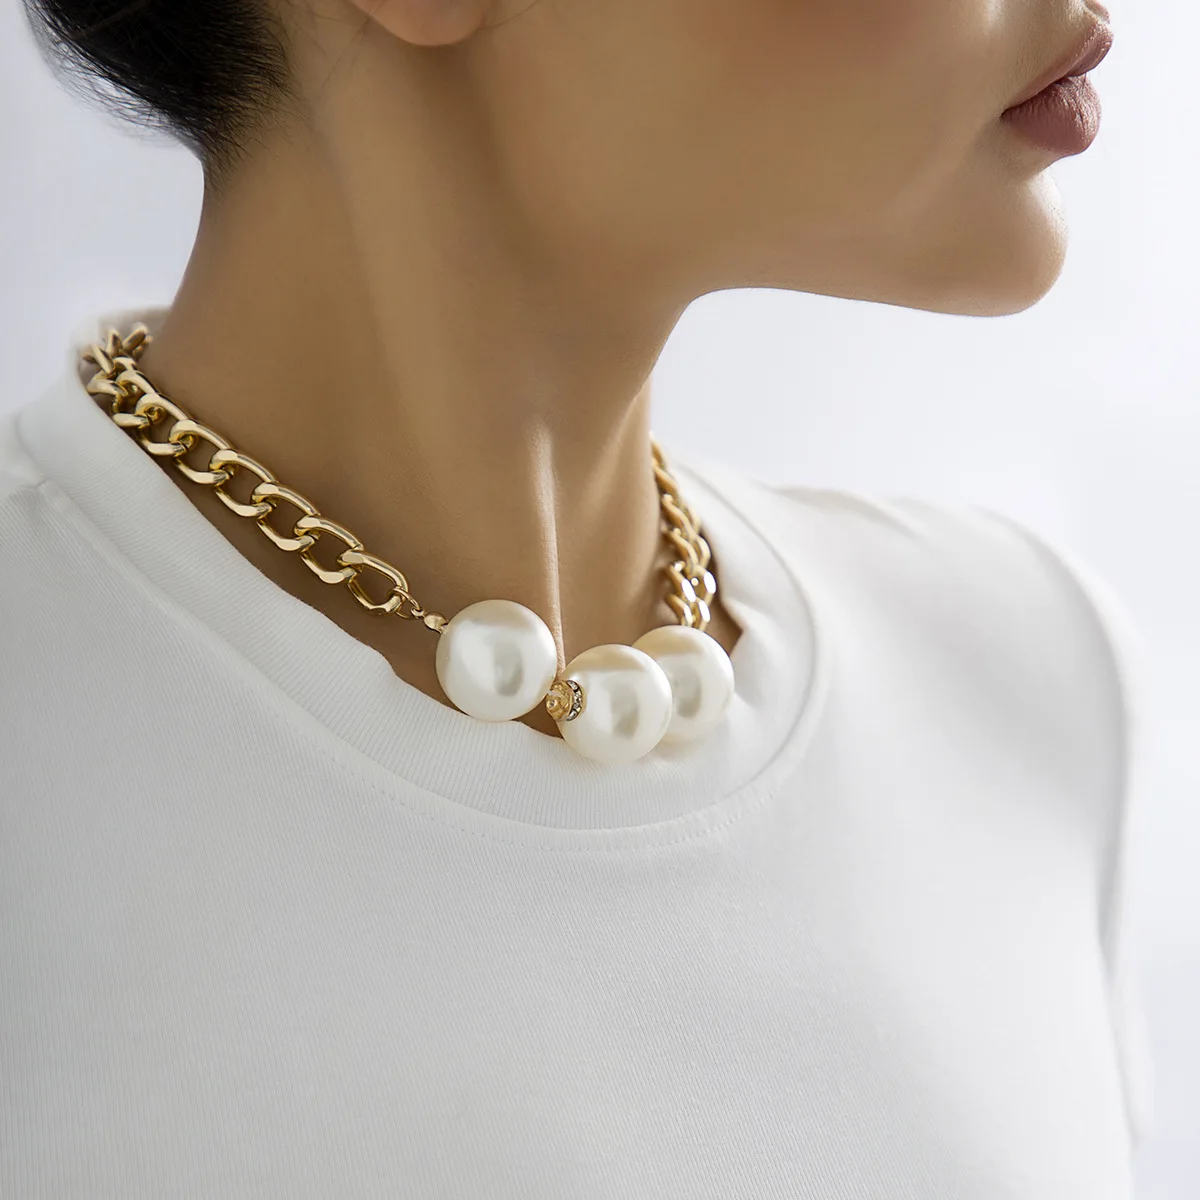 DIEZI Elegant Big Imitation Pearl Rhinestone Necklace For Women Girls Gift  Choker Statement Chain Collar Necklace New Jewelry| | - AliExpress